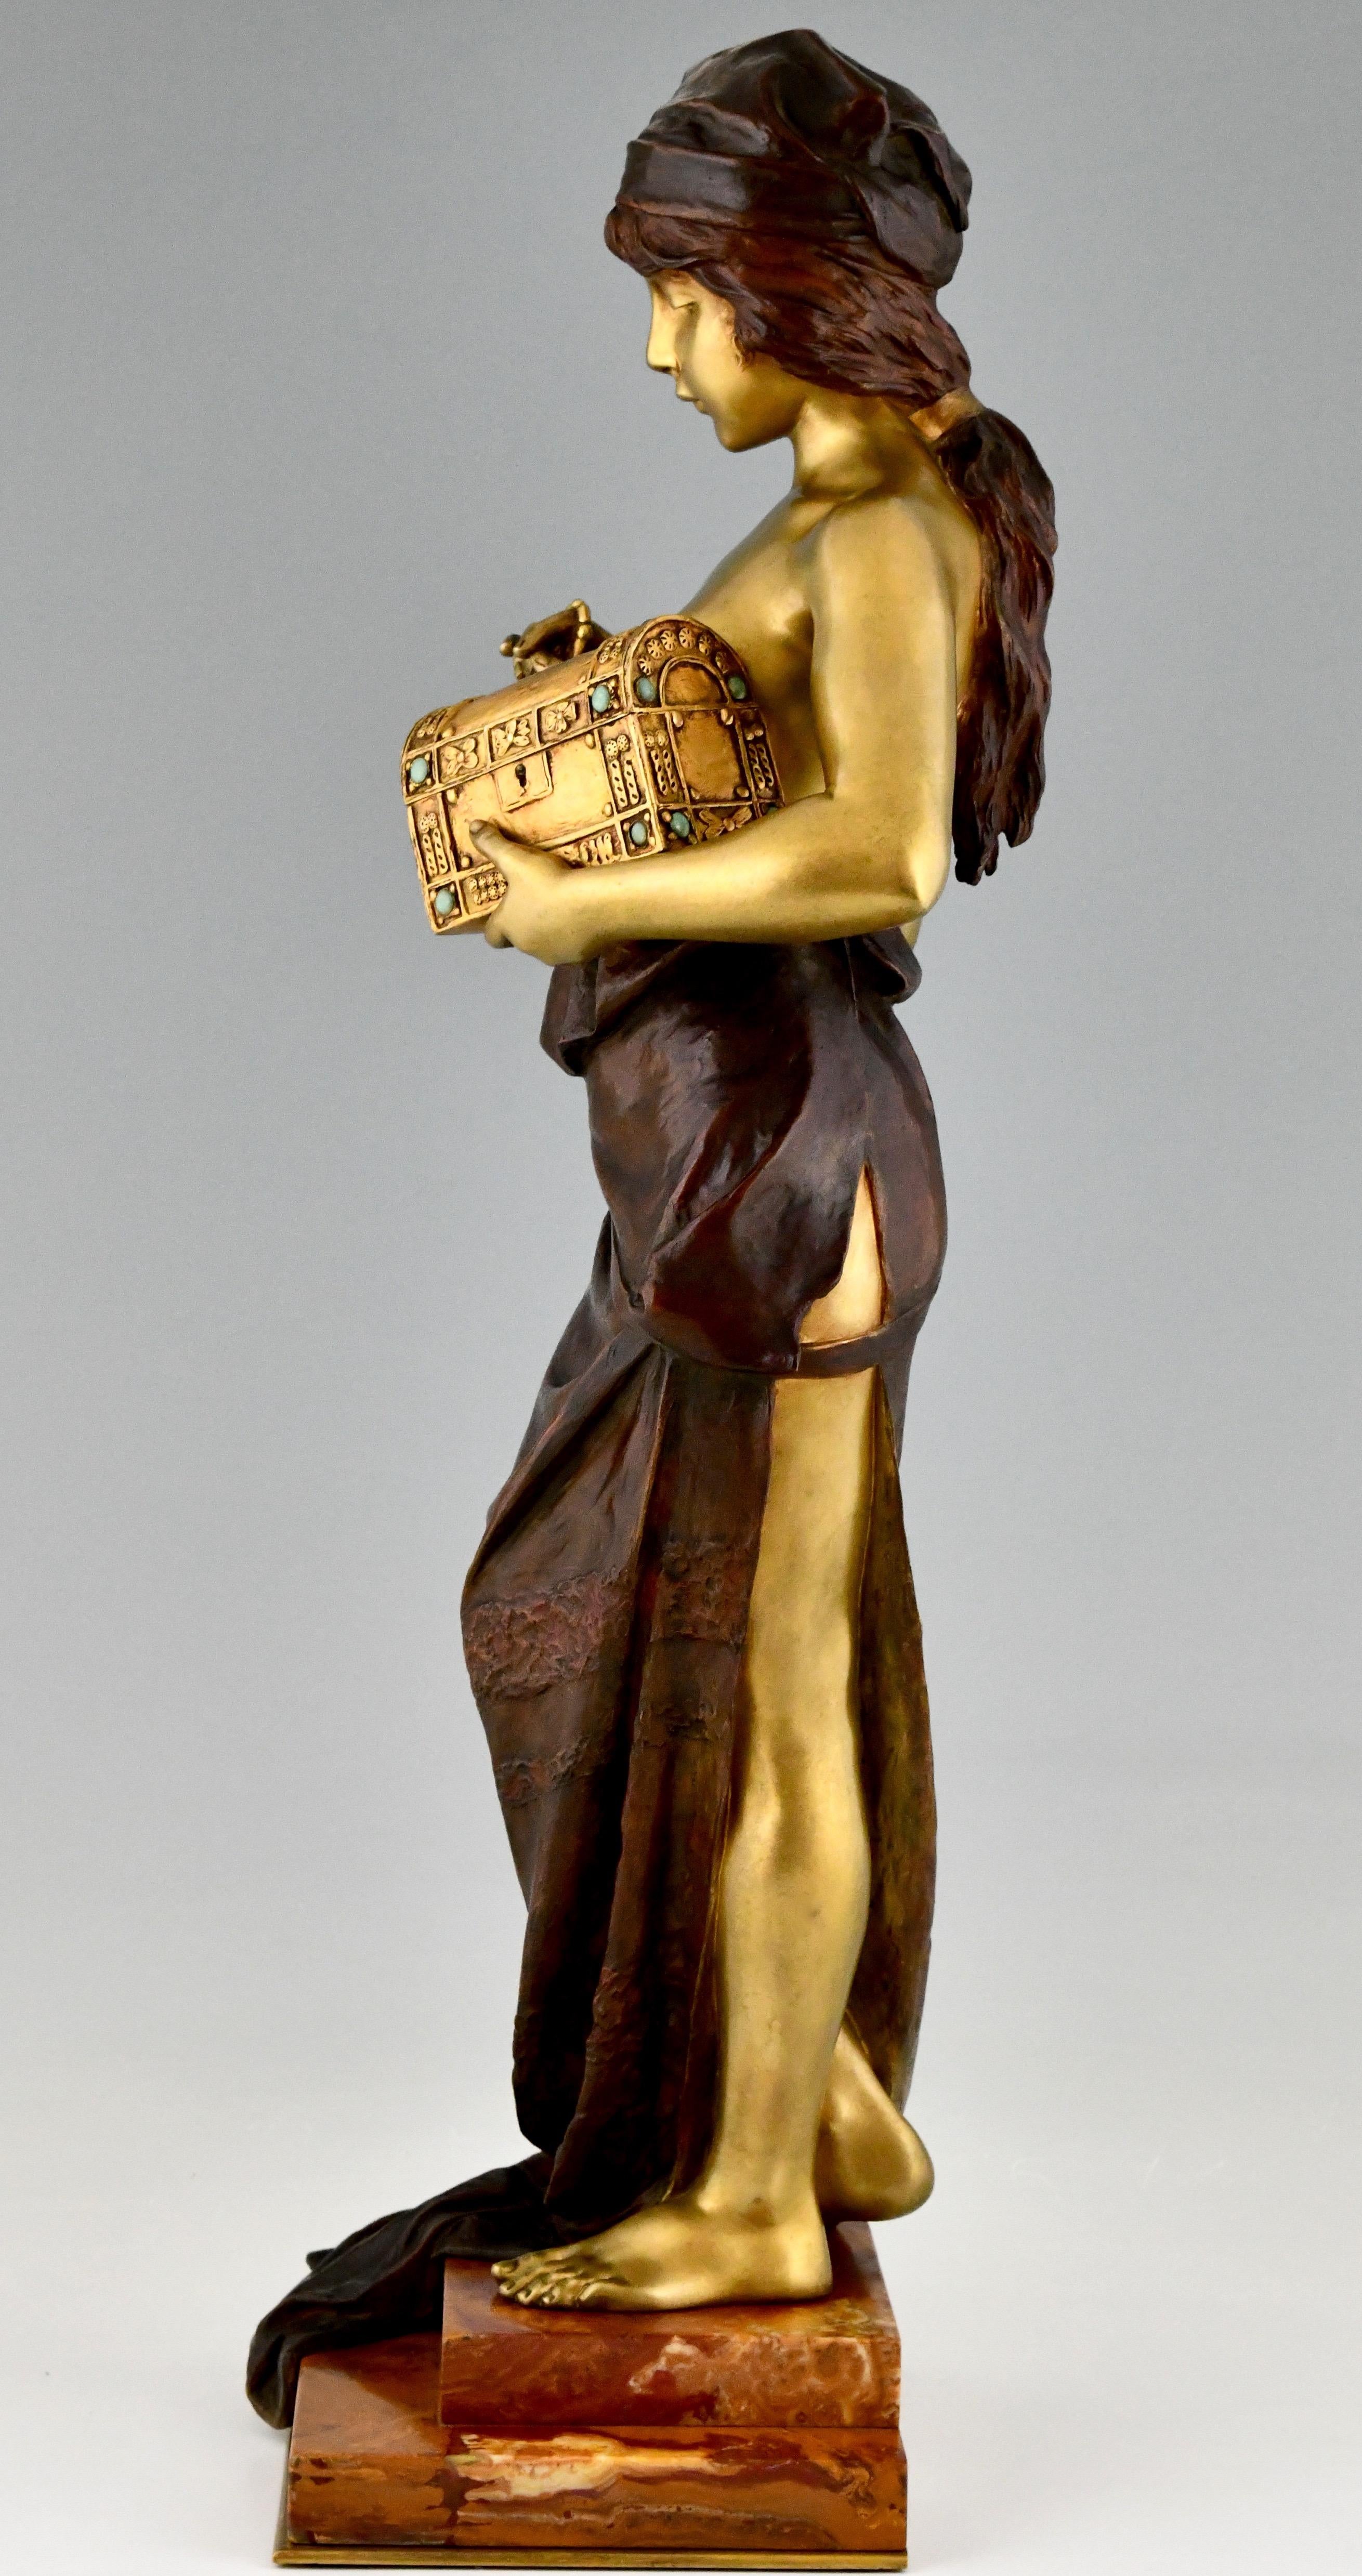 French Art Nouveau Bronze Sculpture Standing Lady with Jewelry Casket E. Villanis 1900